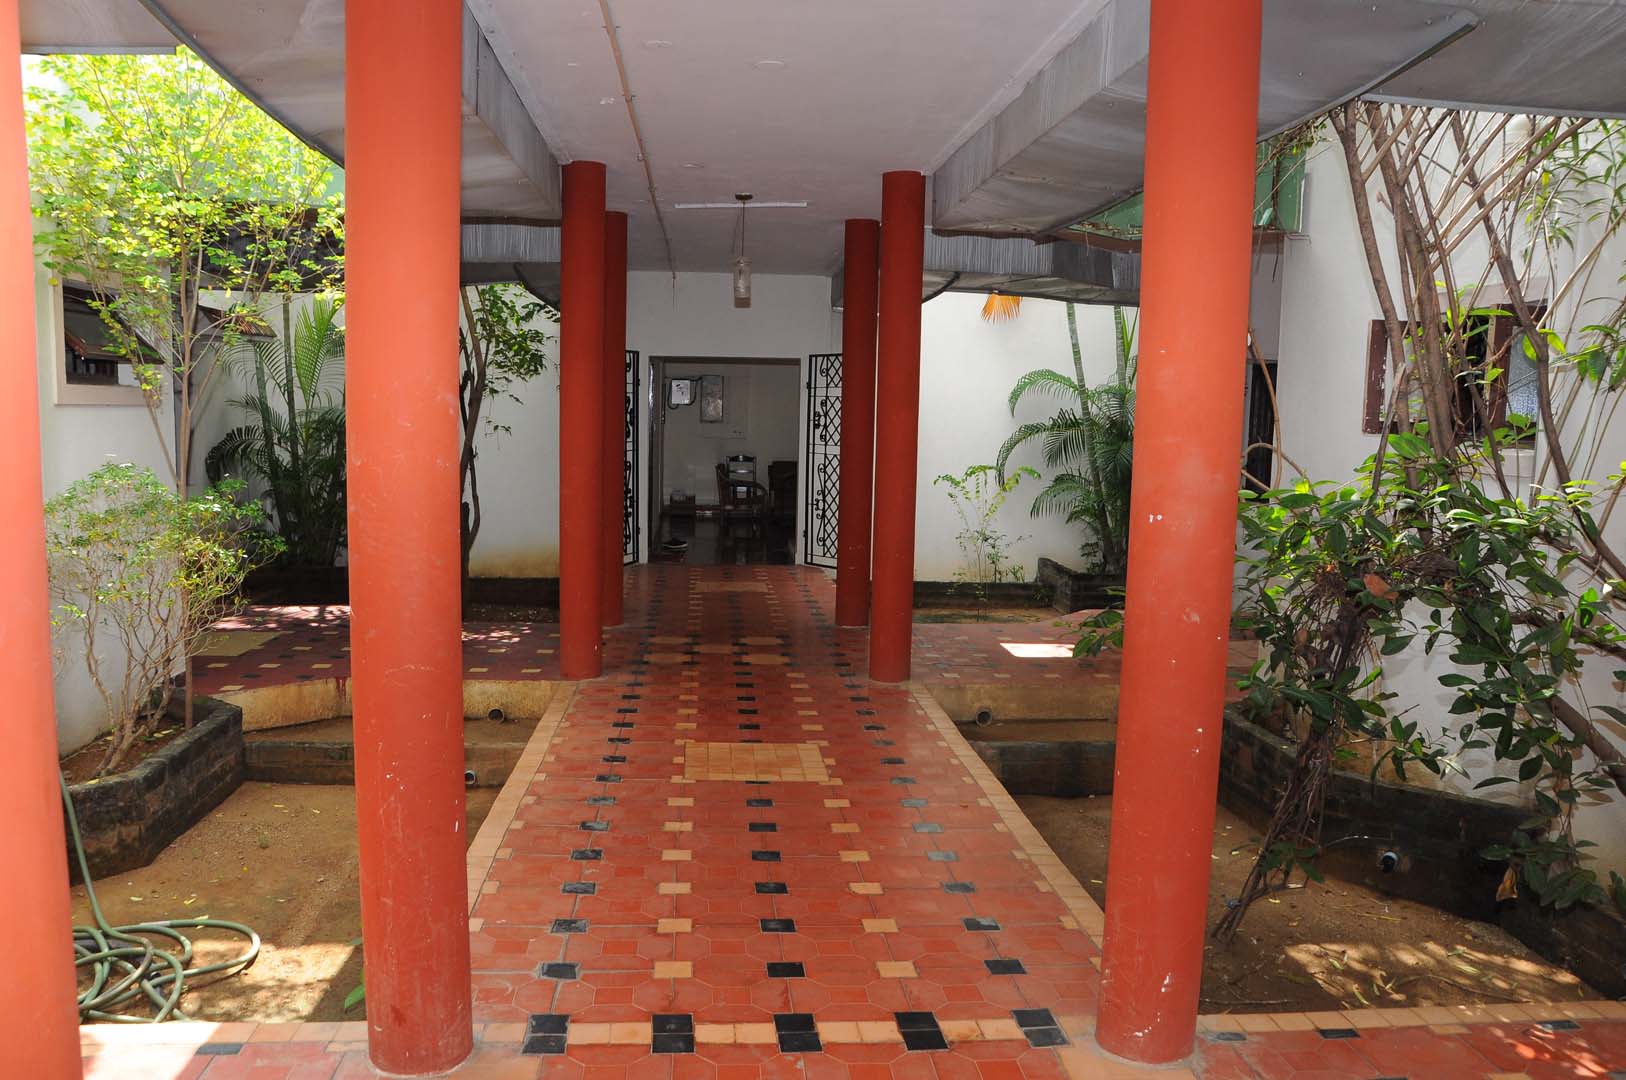 Manolayam Senior Citizens Home